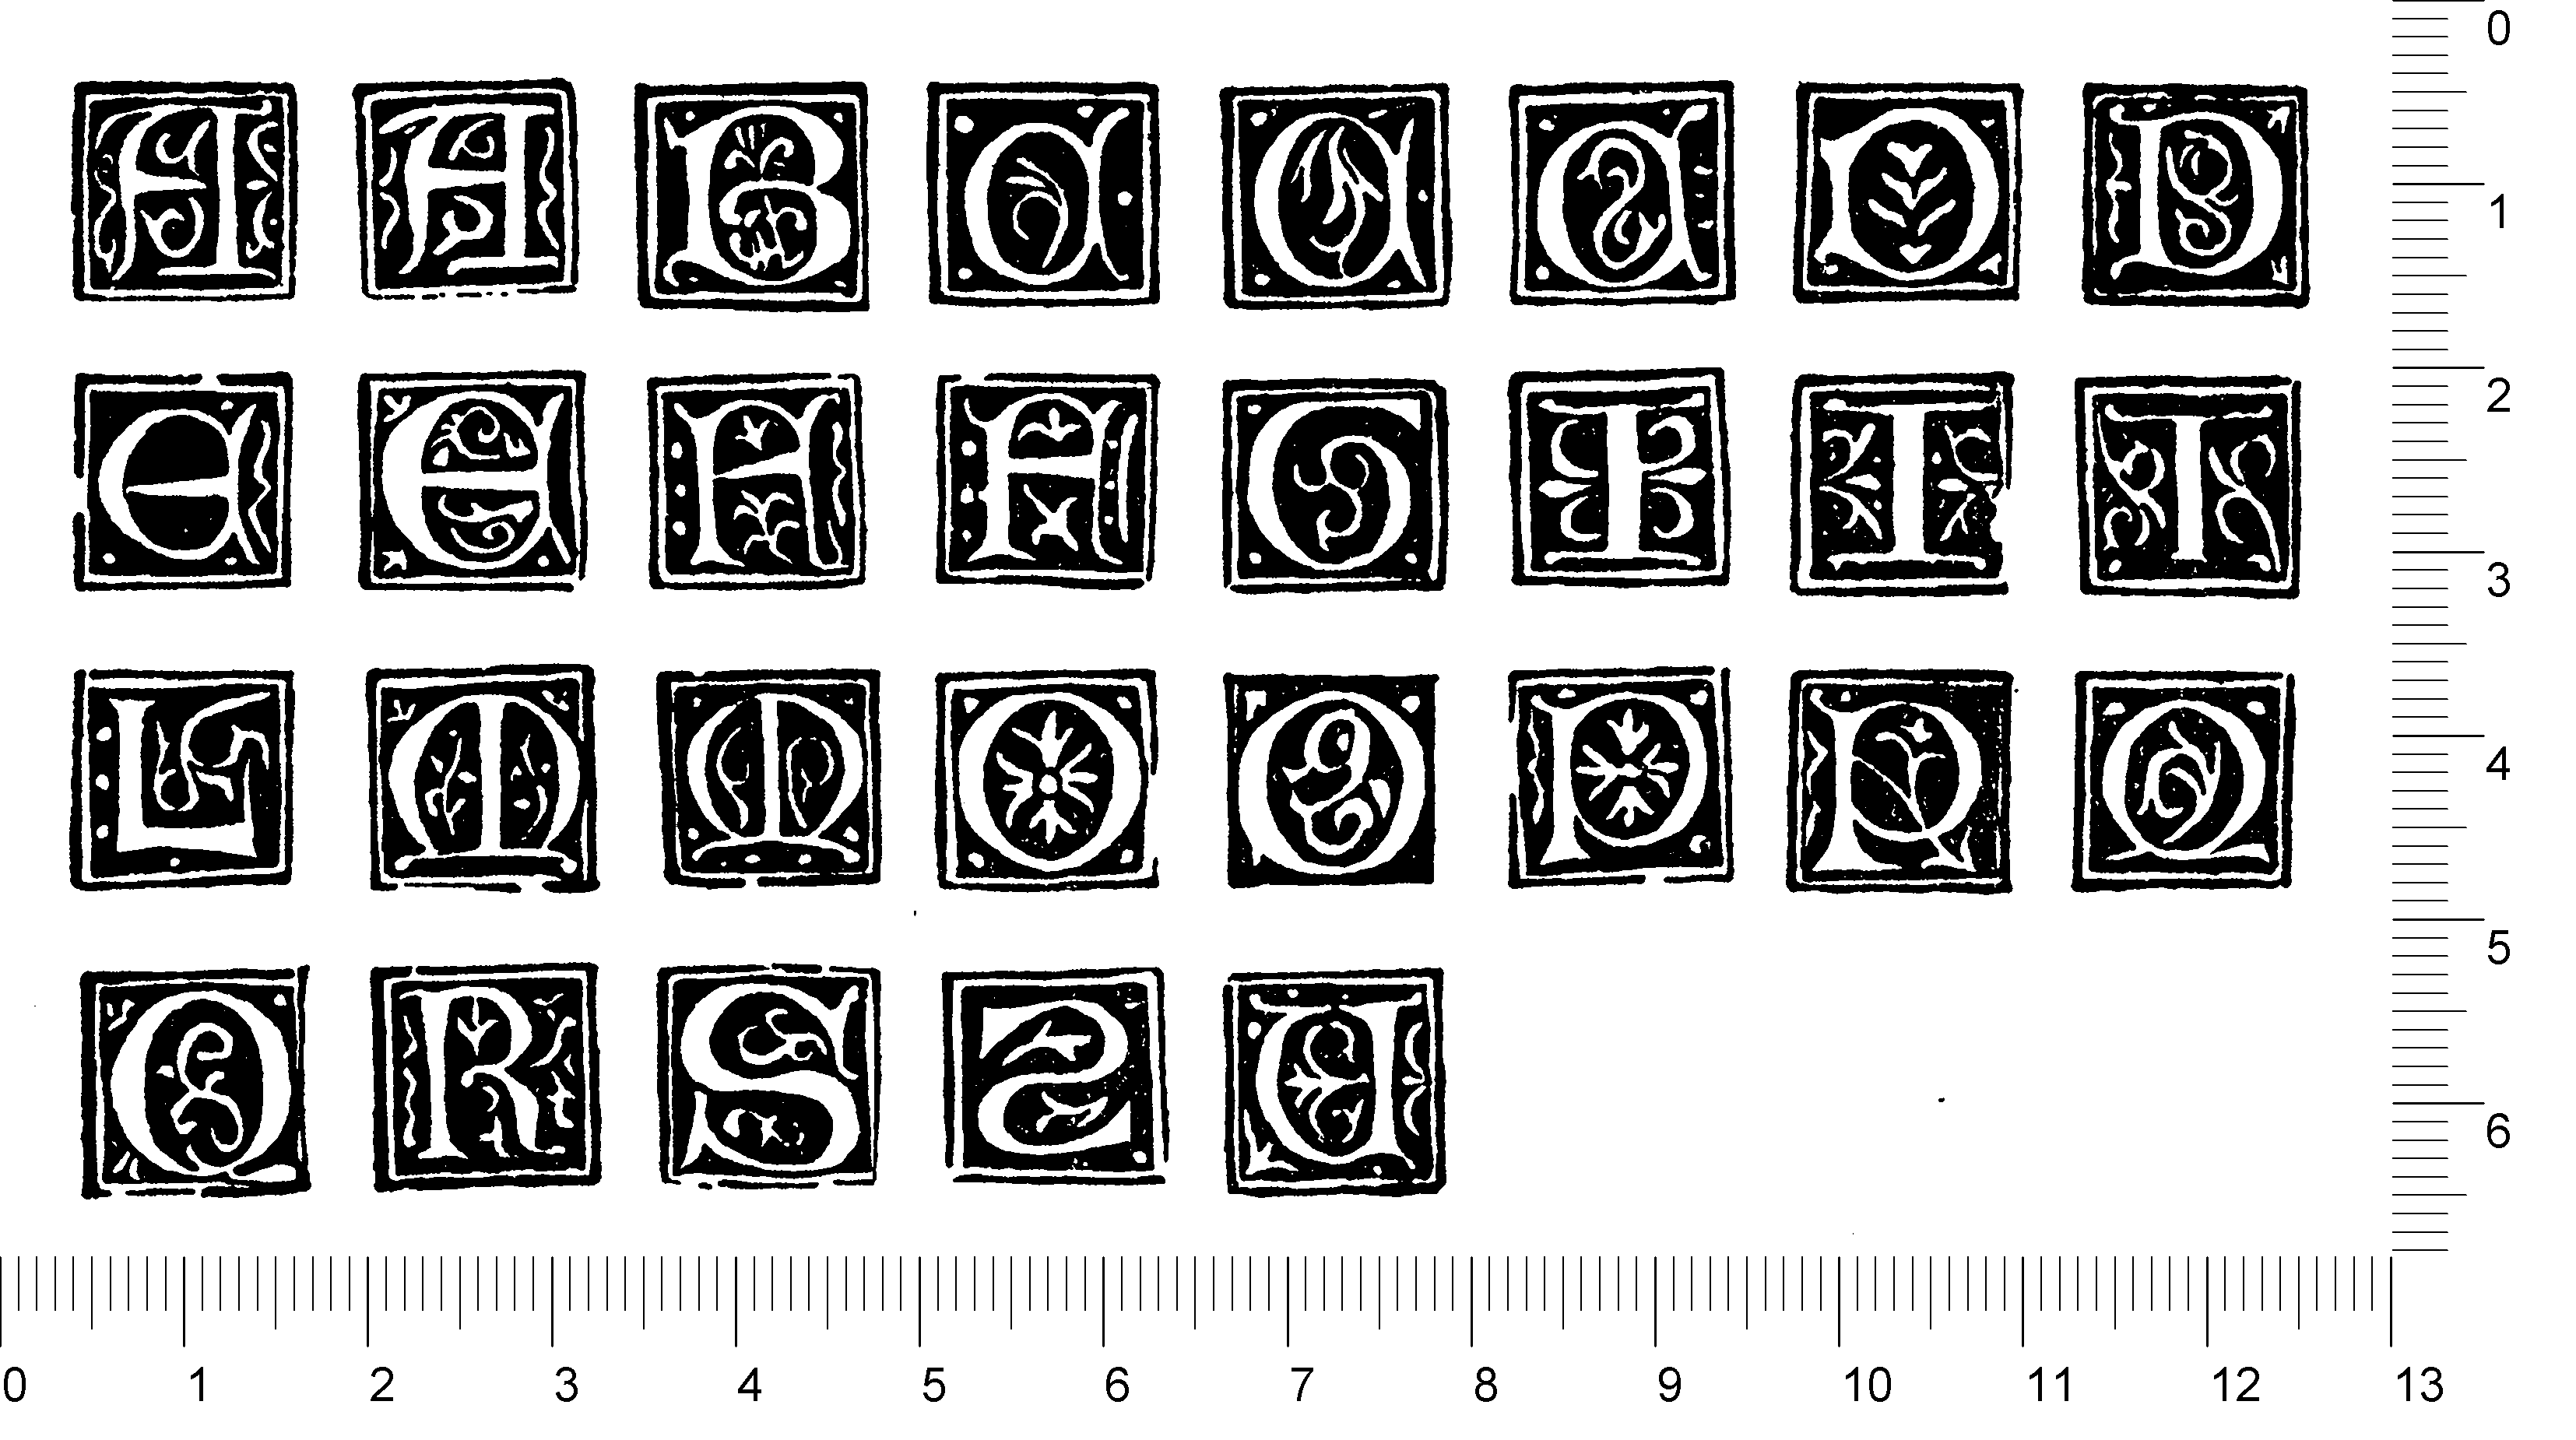 Abbildung der GfT-Tafeln vonGfT2305.2